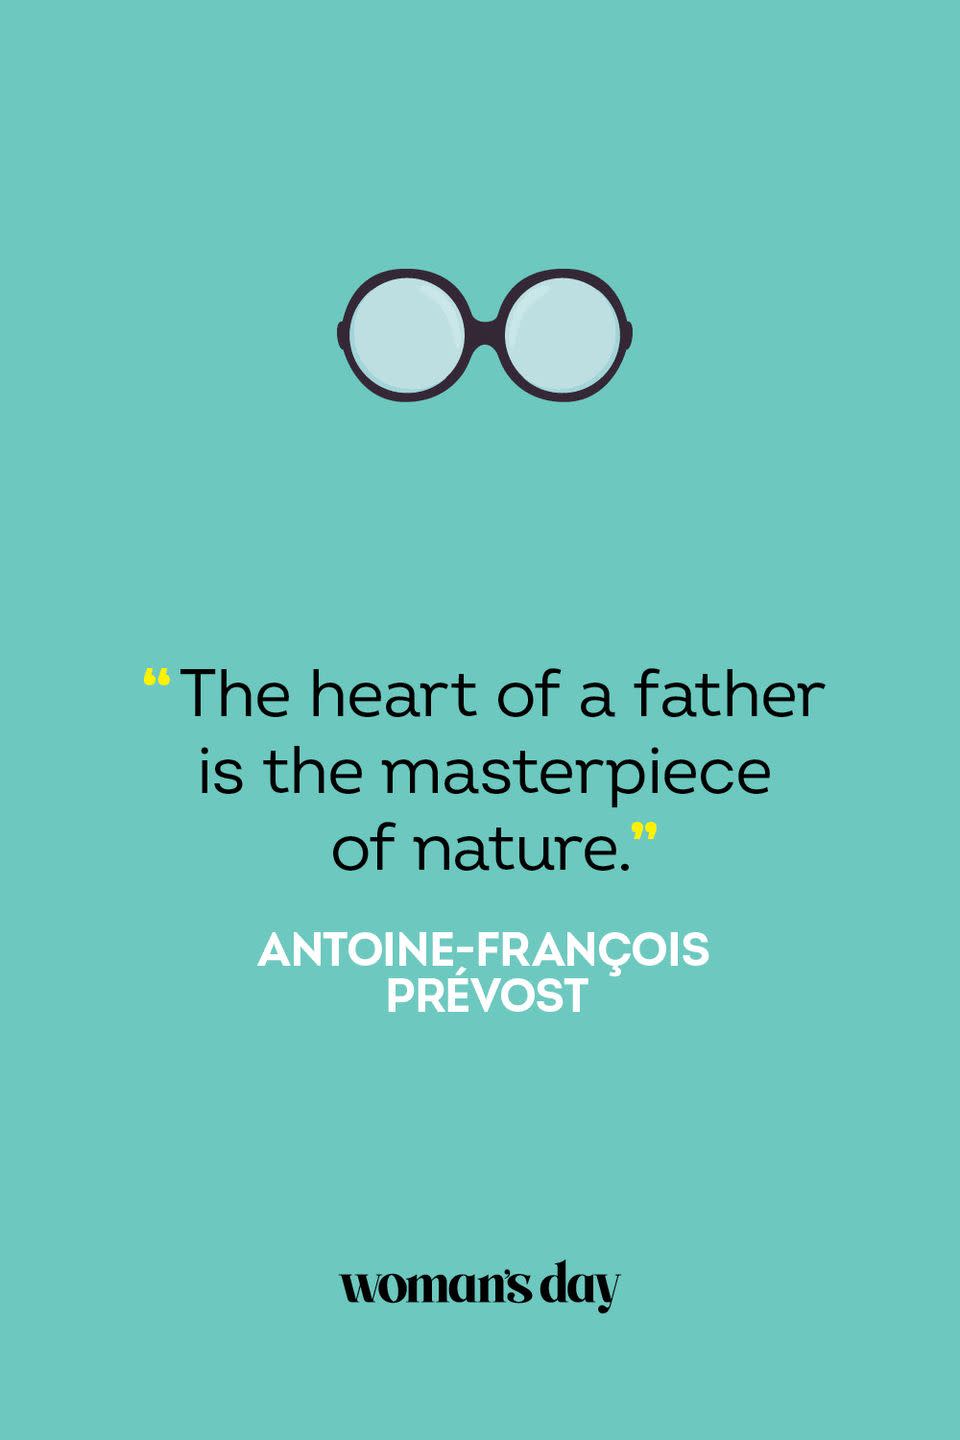 fathers day quotes atoine francois prevost